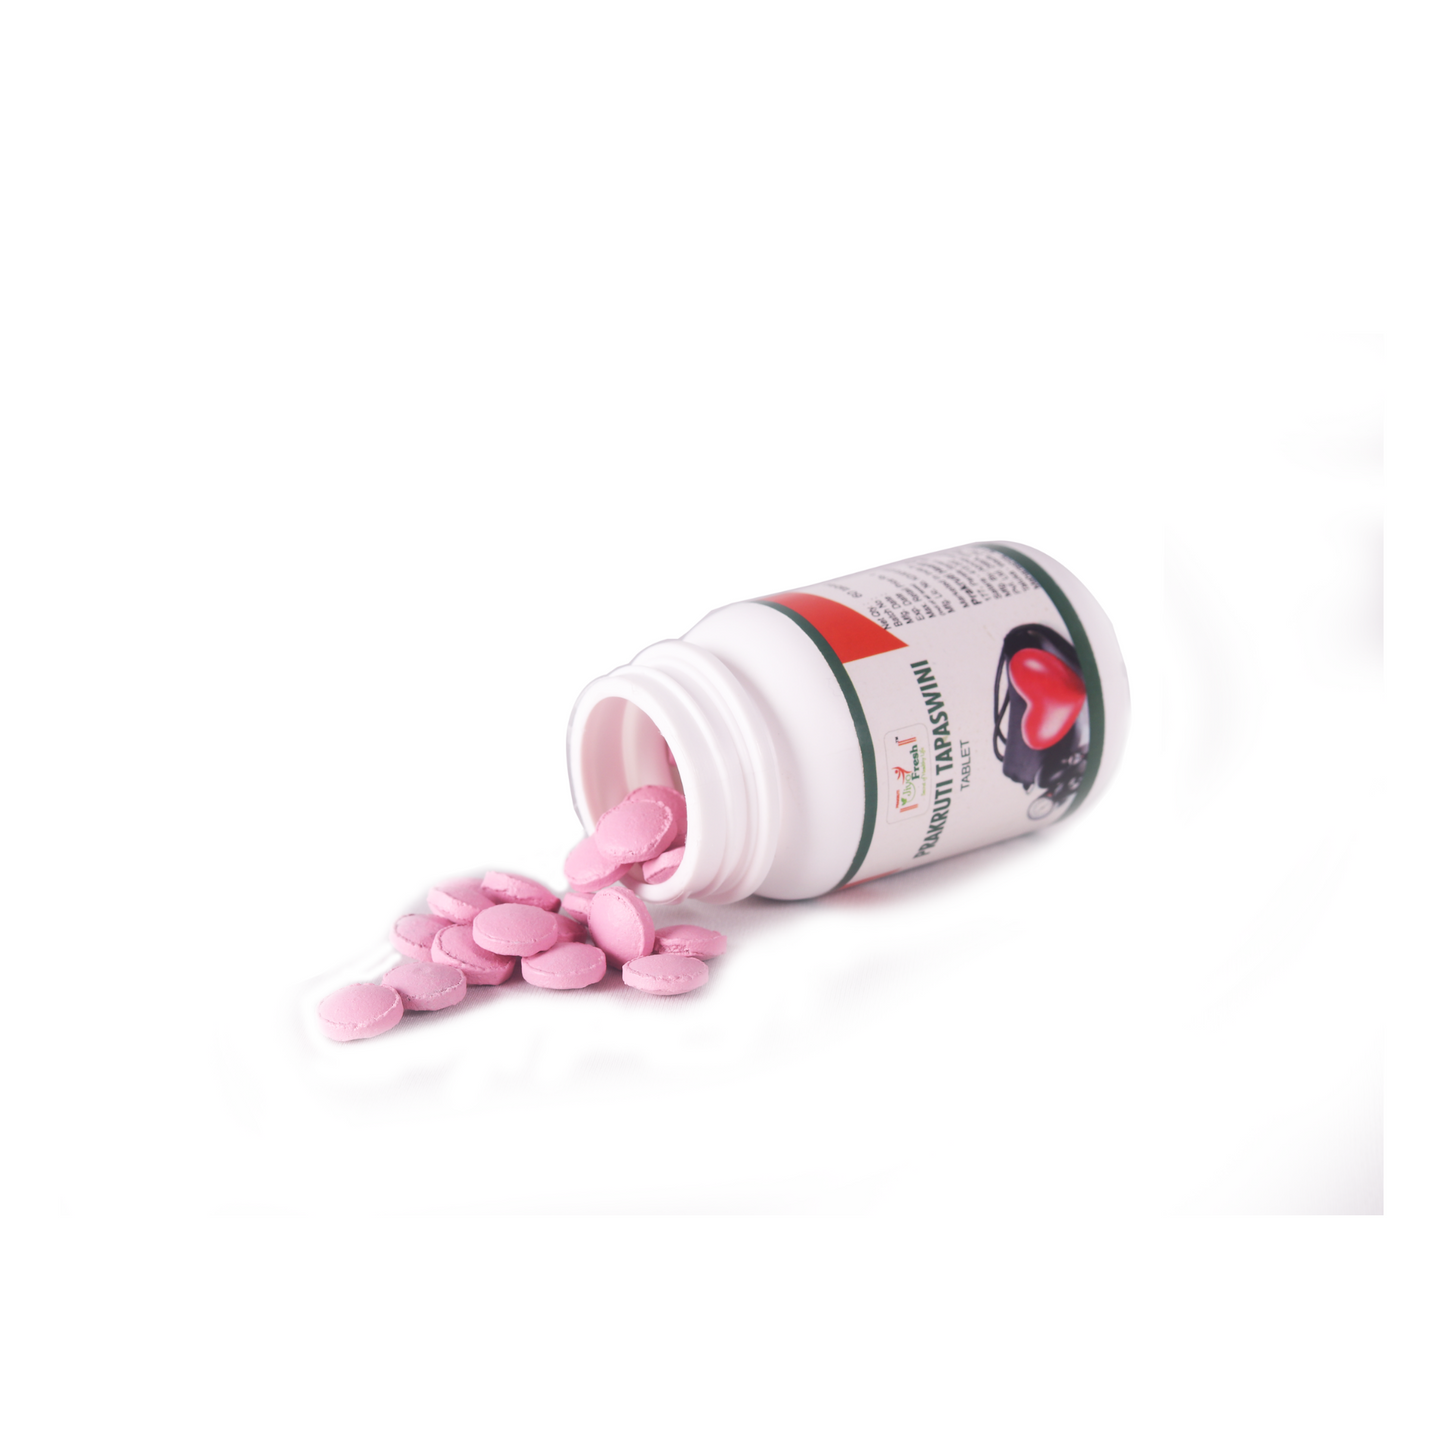 Tapaswini Tablets | Ayurvedic medicine for blood pressure | Medicine for high blood pressure